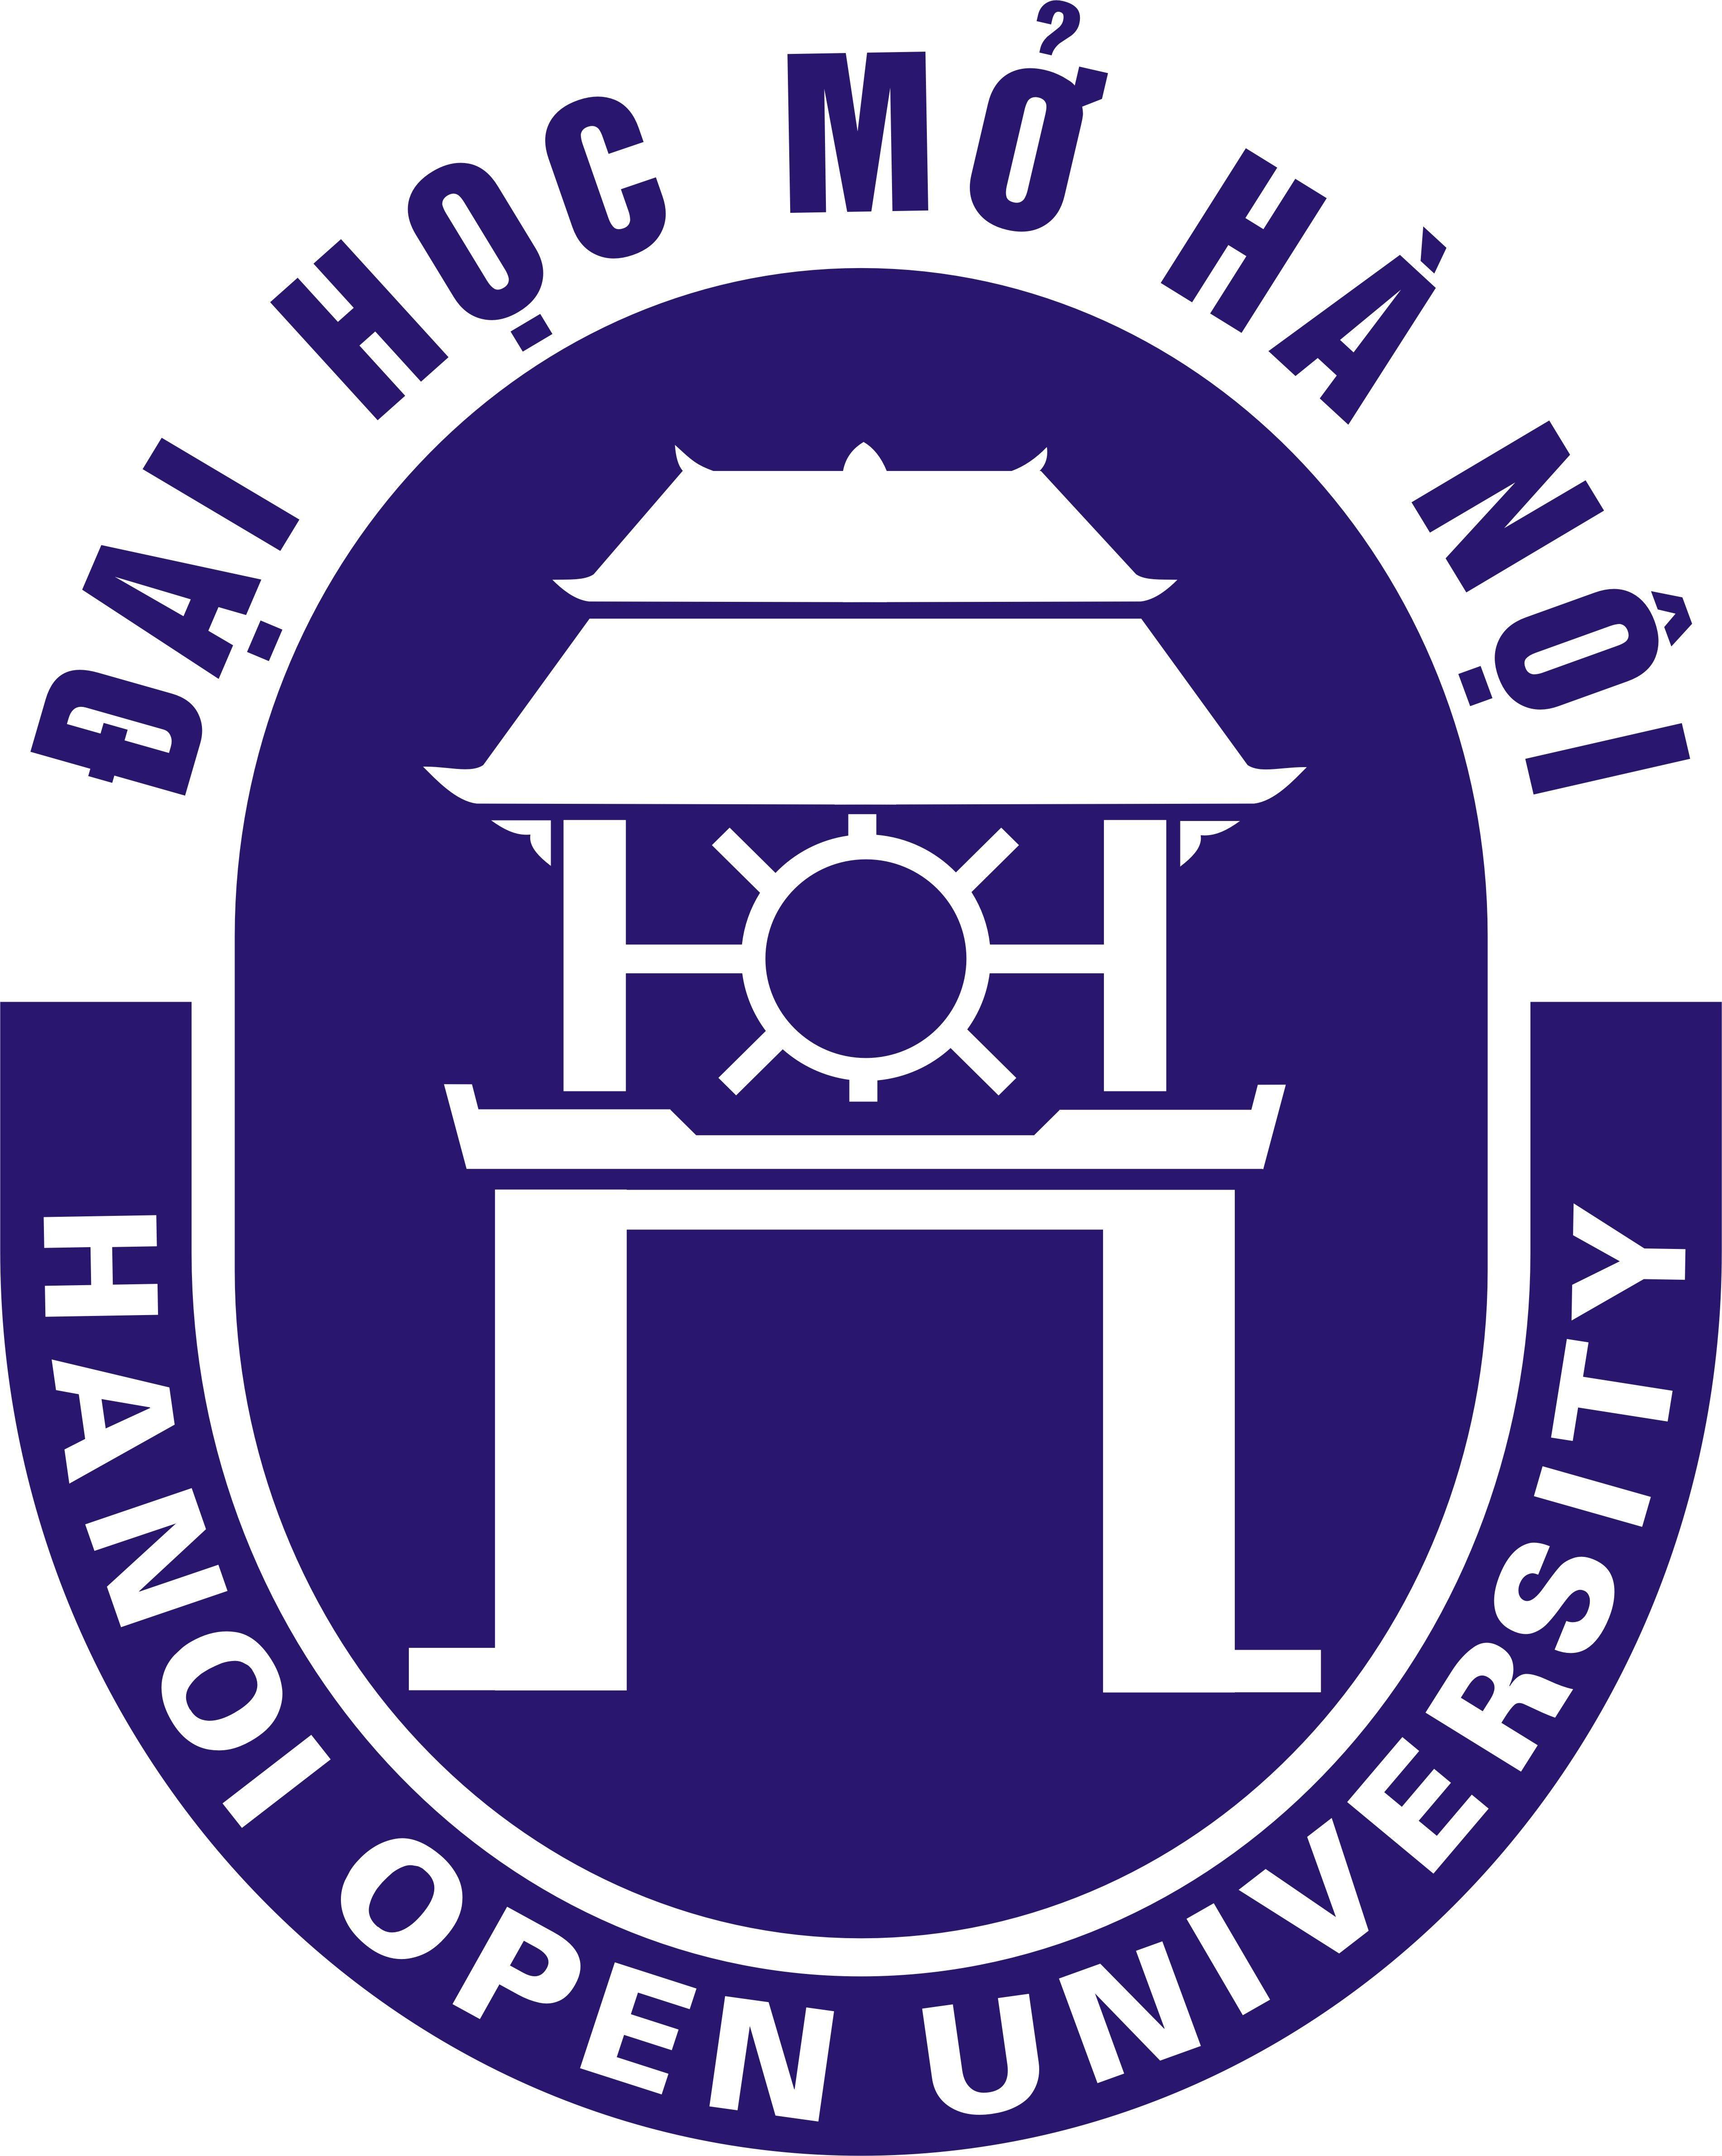 Hou Logo - Hanoi Open University | memorabletrips